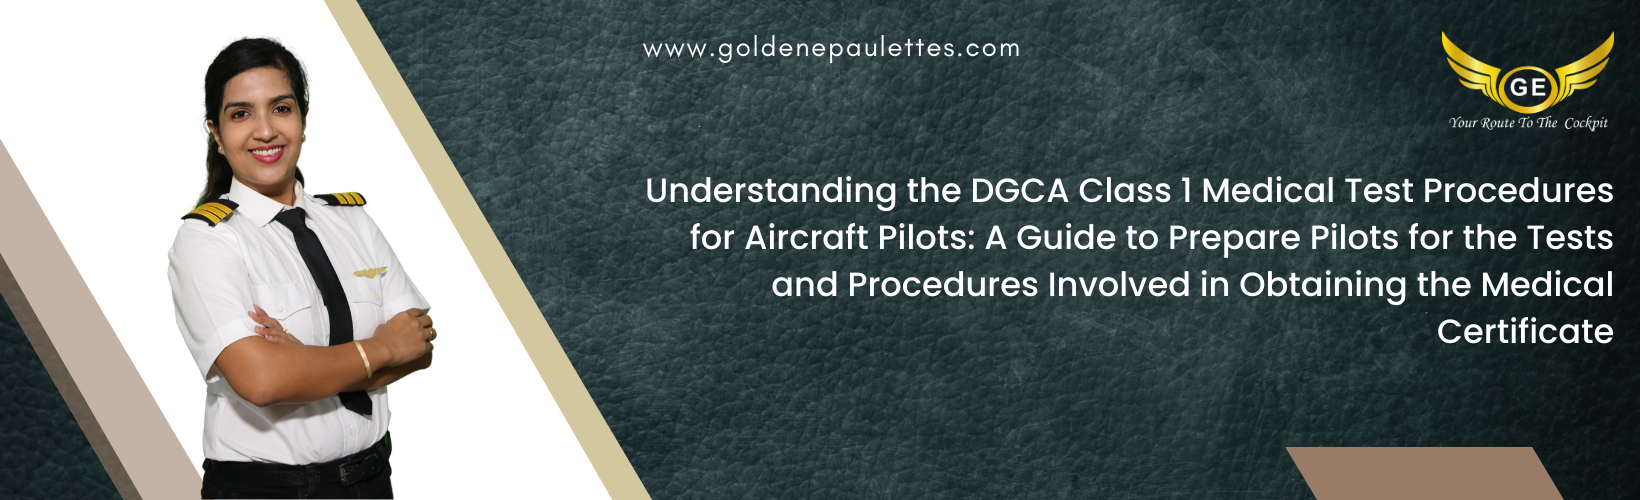 Understanding the DGCA Class 1 Medical Test Procedures for Aircraft Pilots